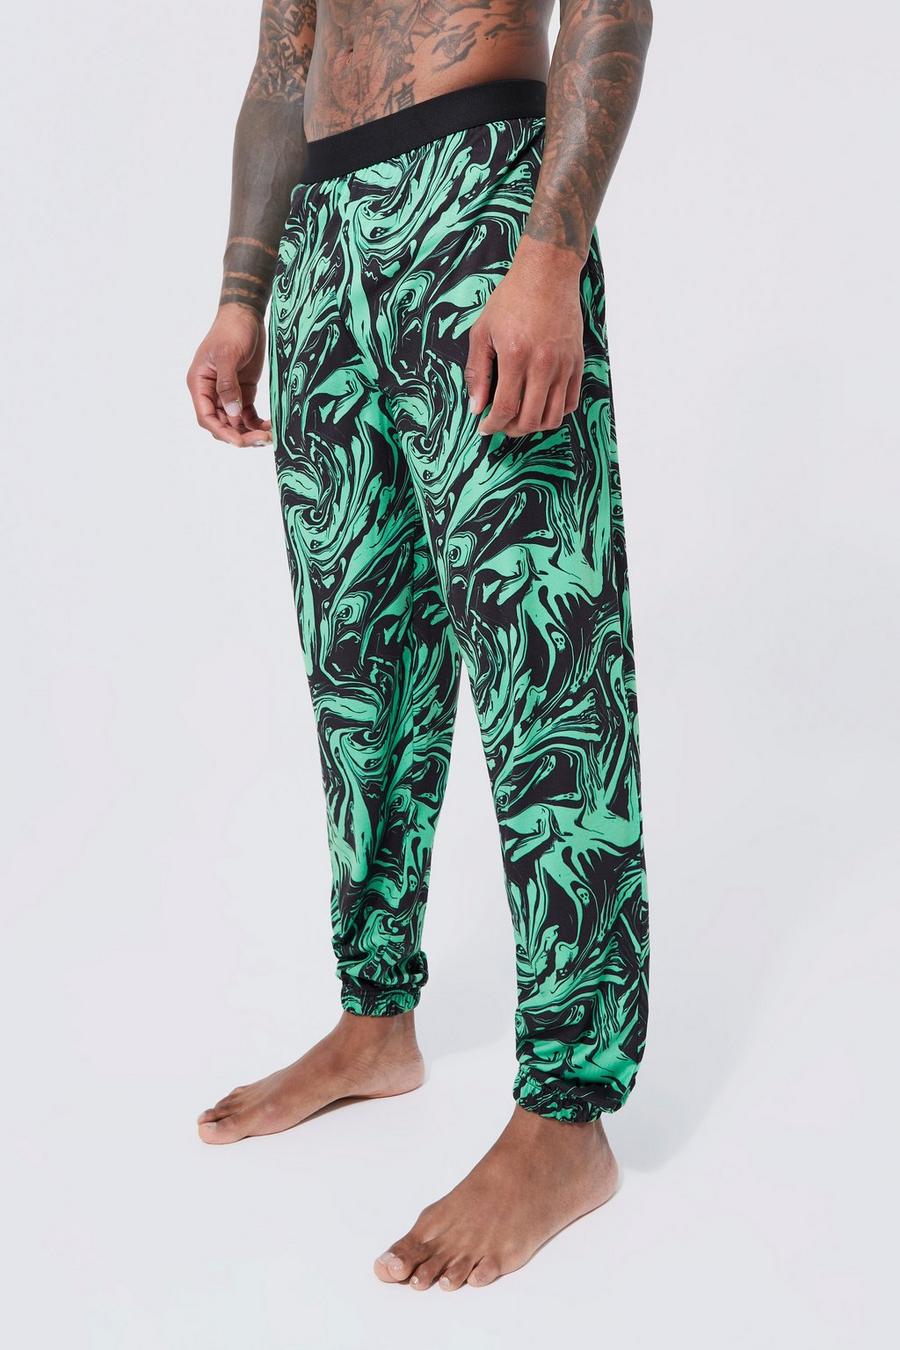 Pantaloni tuta di Loungewear da casa con stampa marmorizzata, Green gerde